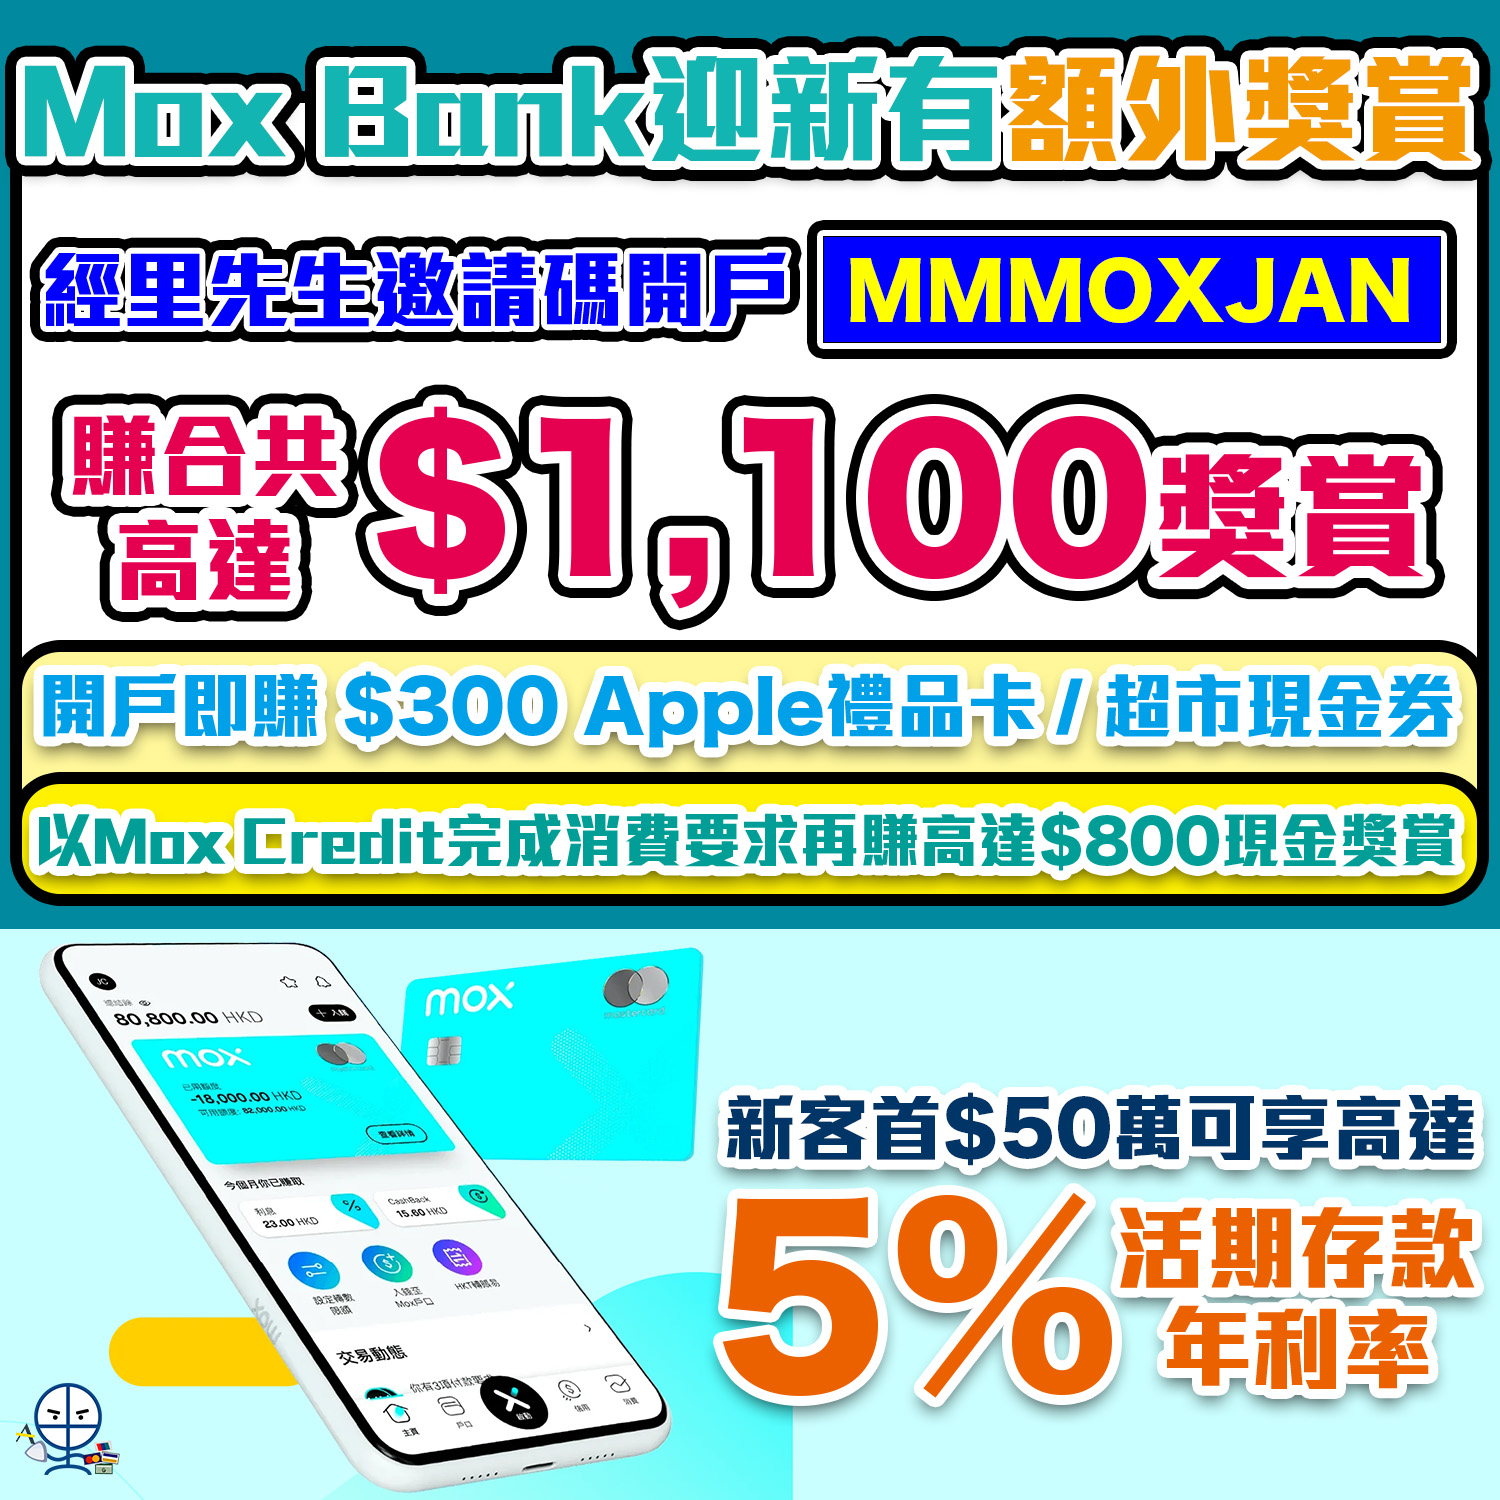 Mox 邀請碼賺高達HK$1,100獎賞，包括里先生額外$300 Apple Gift Gard/超市現金券！Mox Bank利息/優惠/回贈一覽